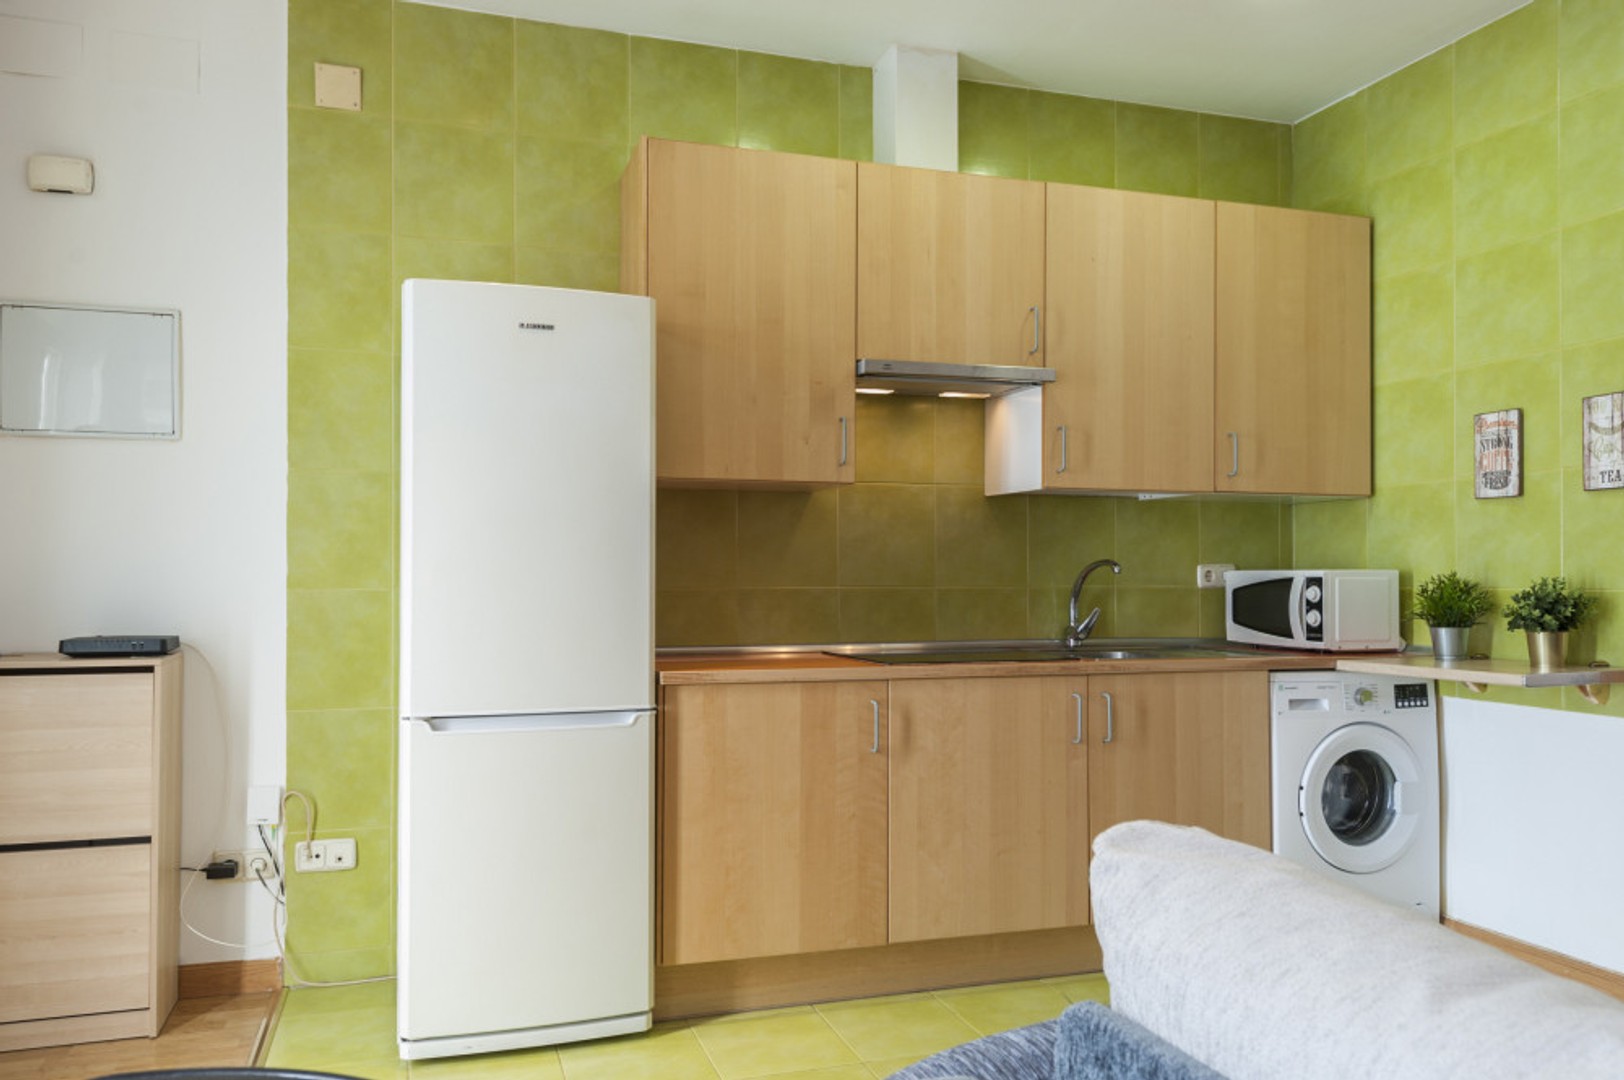 Luminoso e moderno appartamento a Madrid